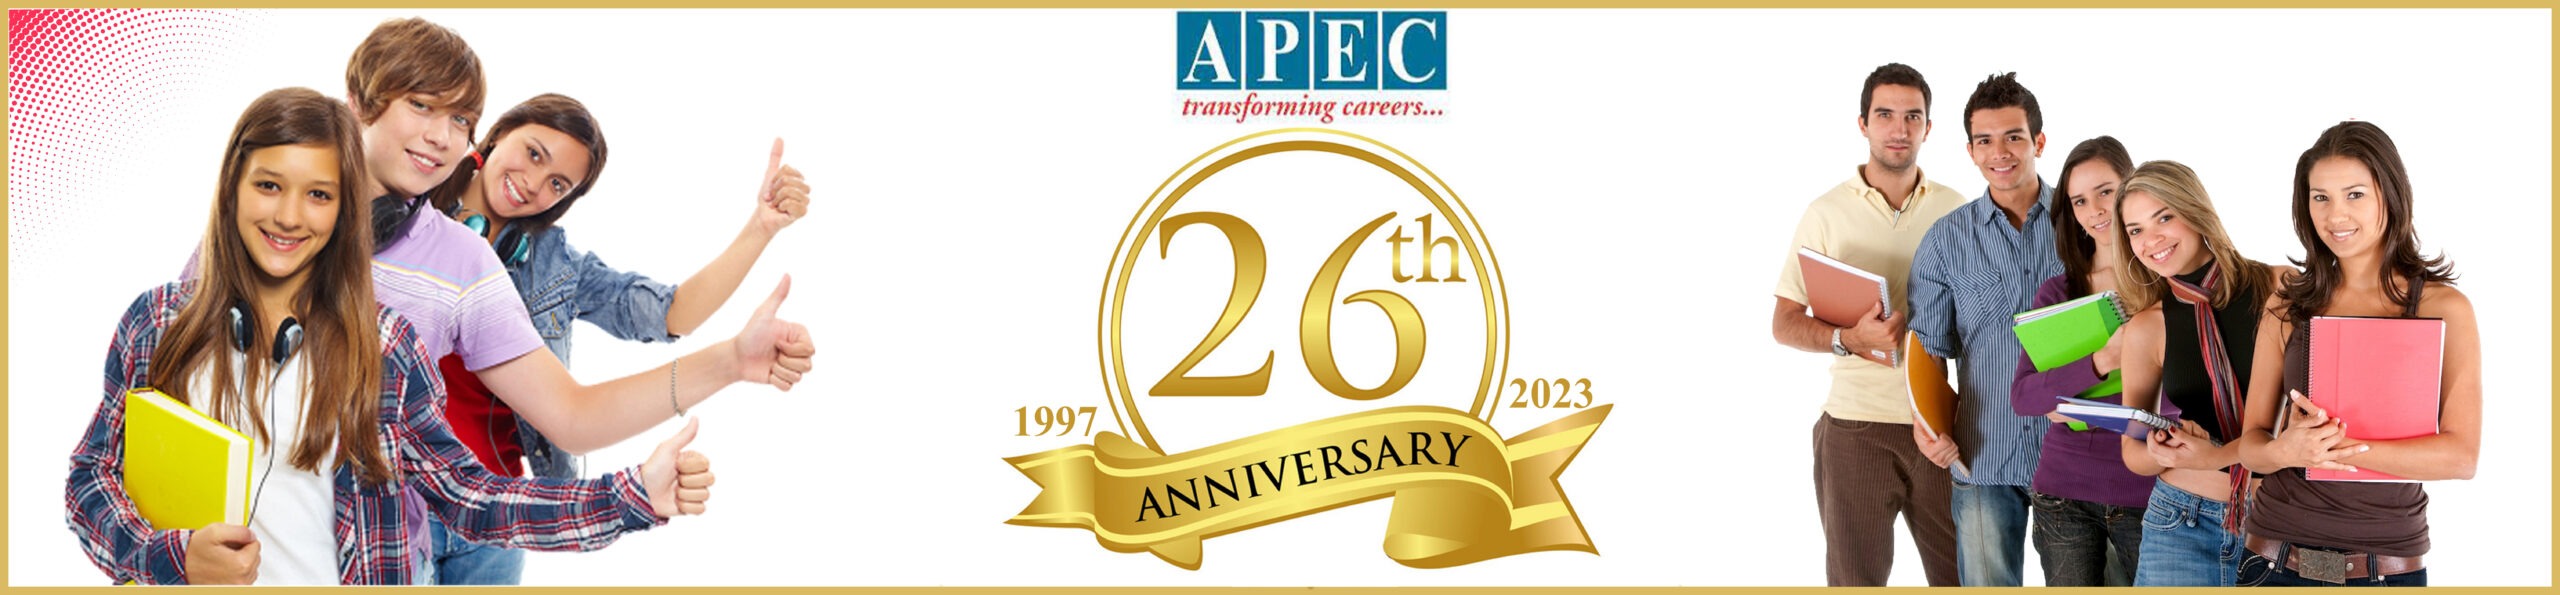 APEC 26th an